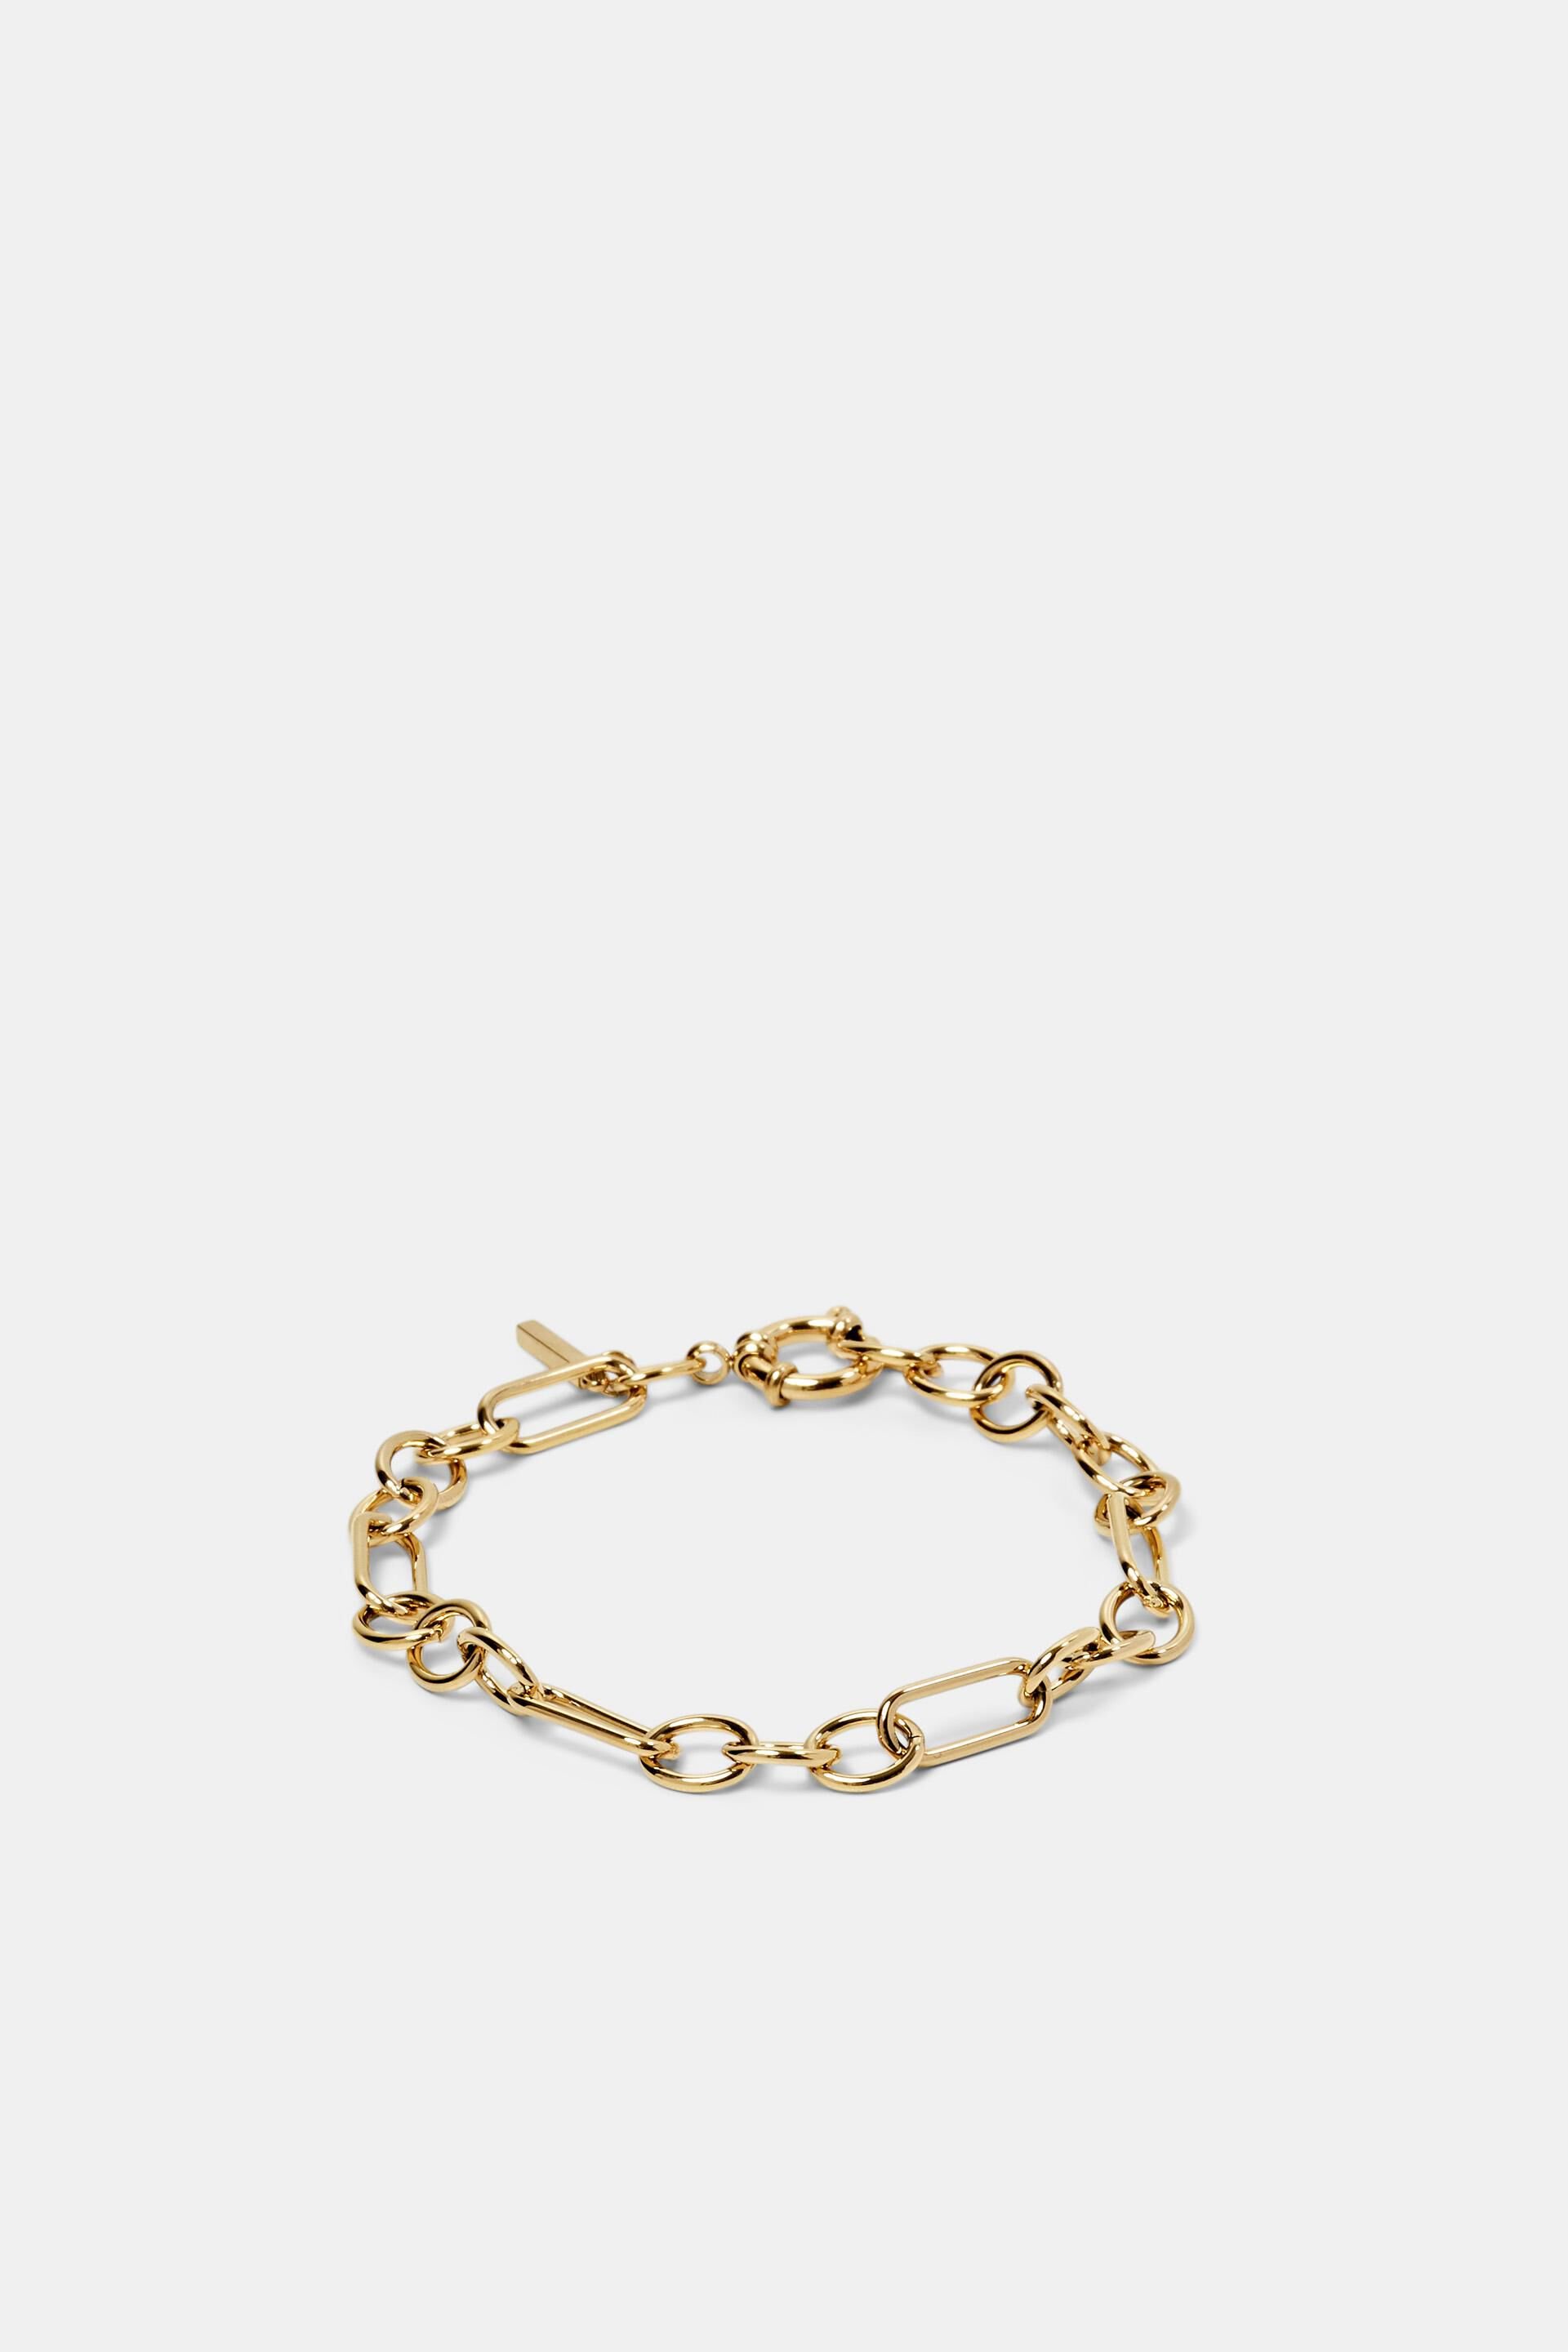 Esprit steel bracelet, stainless Link